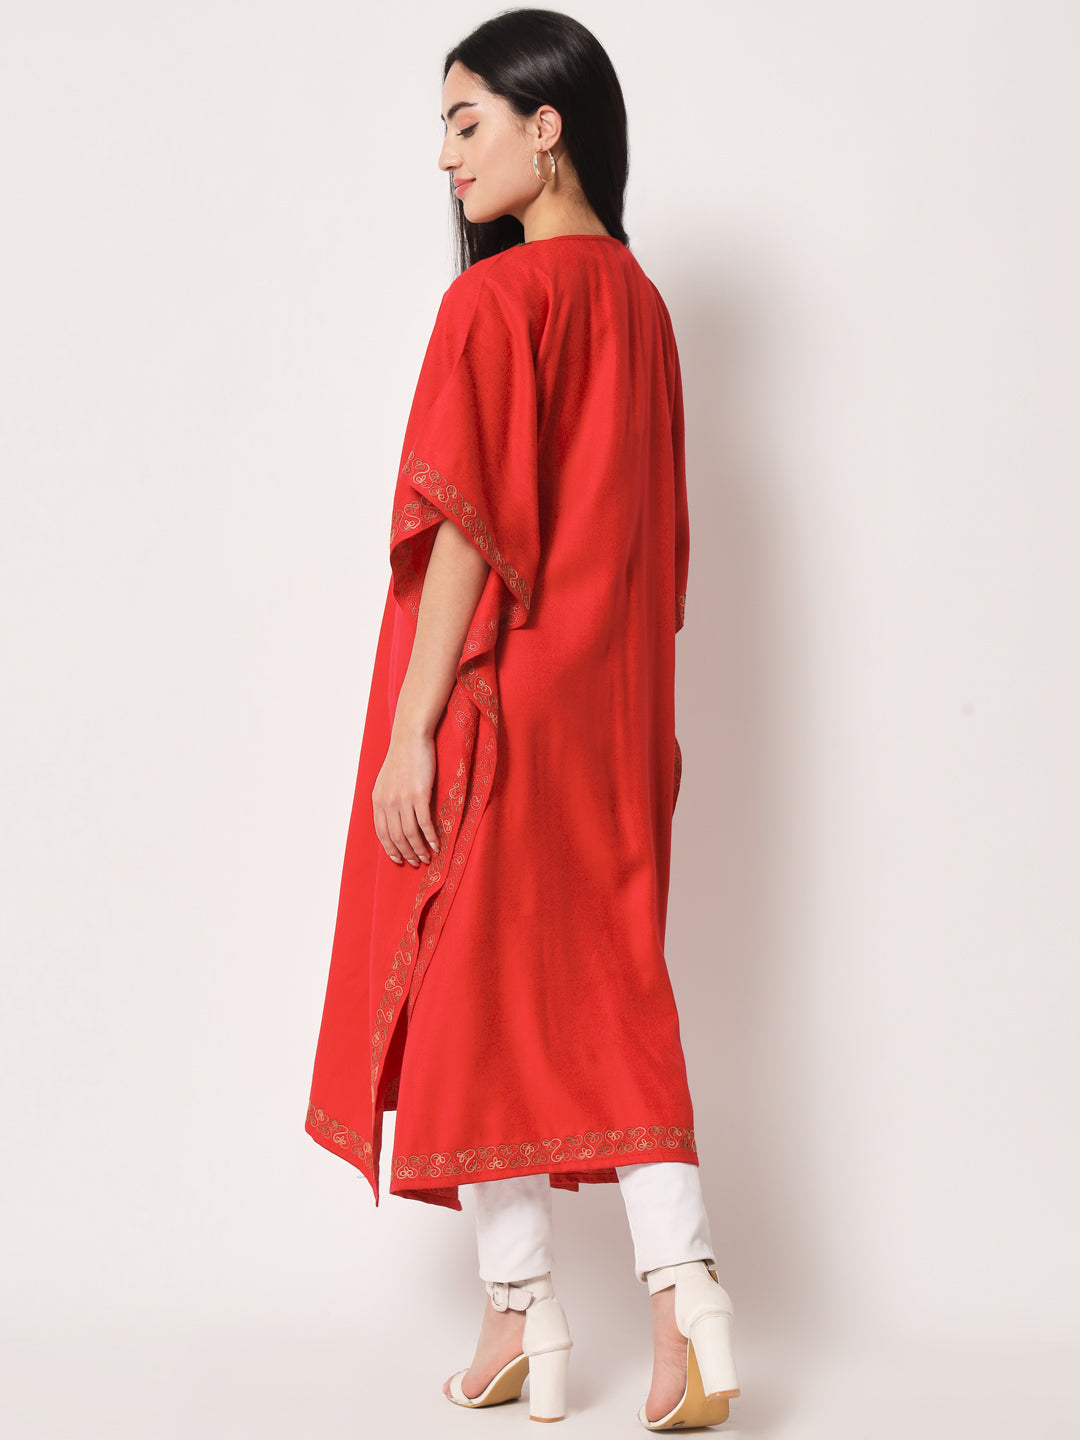 Buy Woolen Women Kurtis Pheran with Unique Kashmiri Charming Embroidery  Stylish Winter Wear for Women, Peach-1, 6XL (1234) at Amazon.in